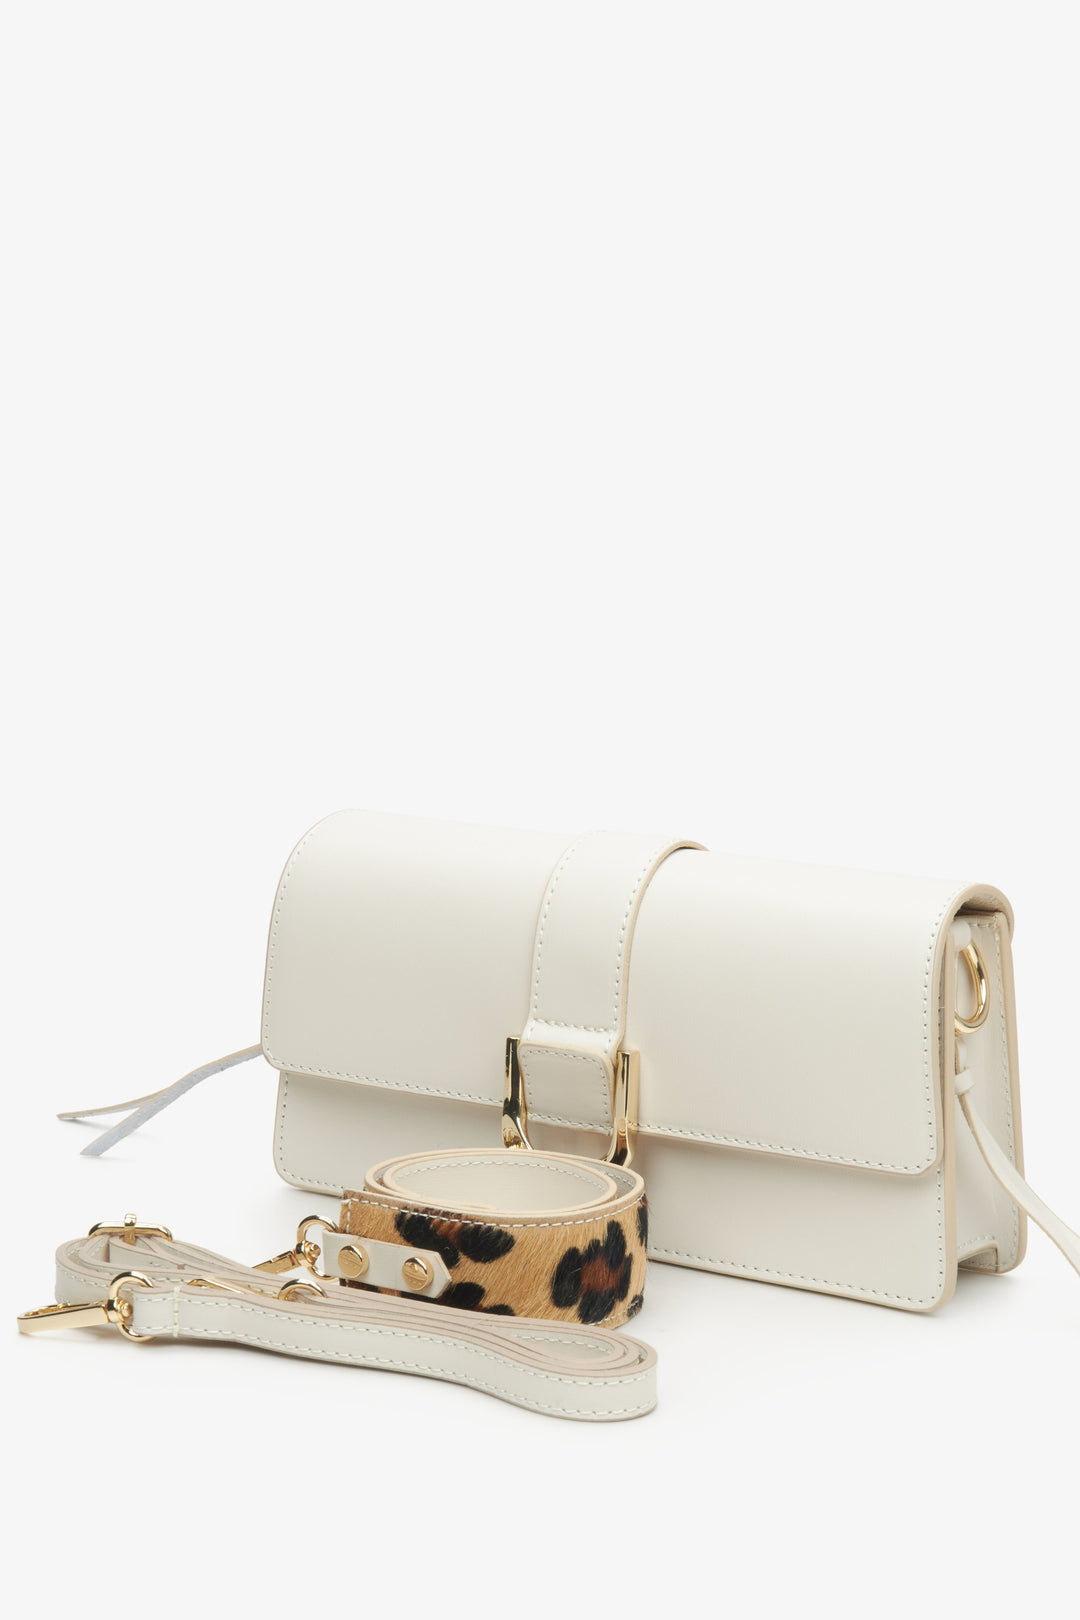 Women's light beige handbag Estro with animal prints.